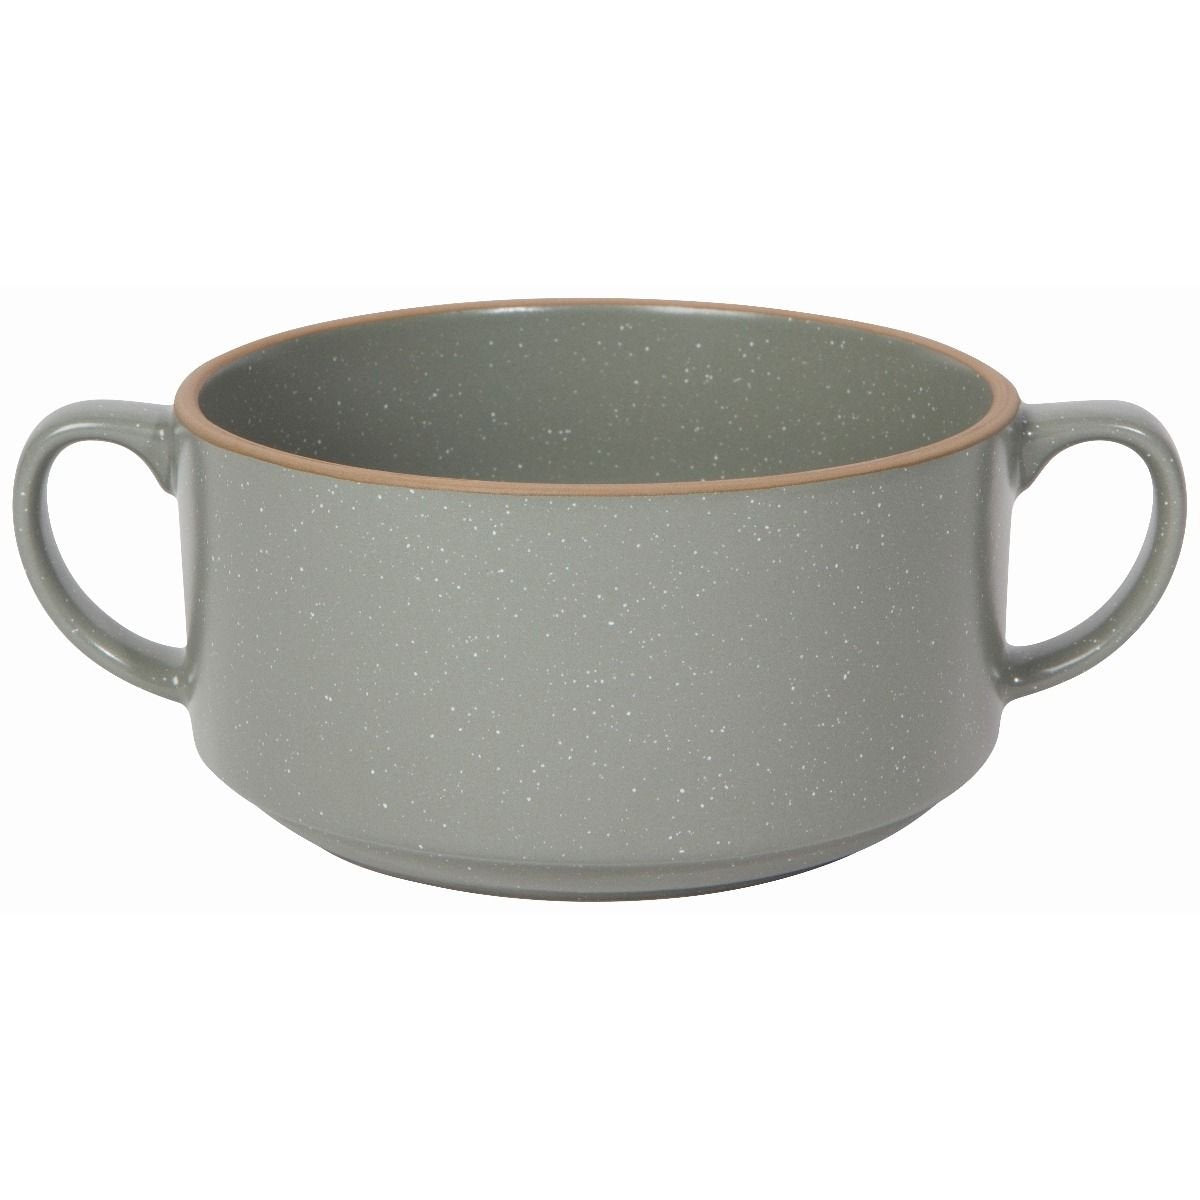 View Now Designs - Double Handle Soup Bowl - London Gray